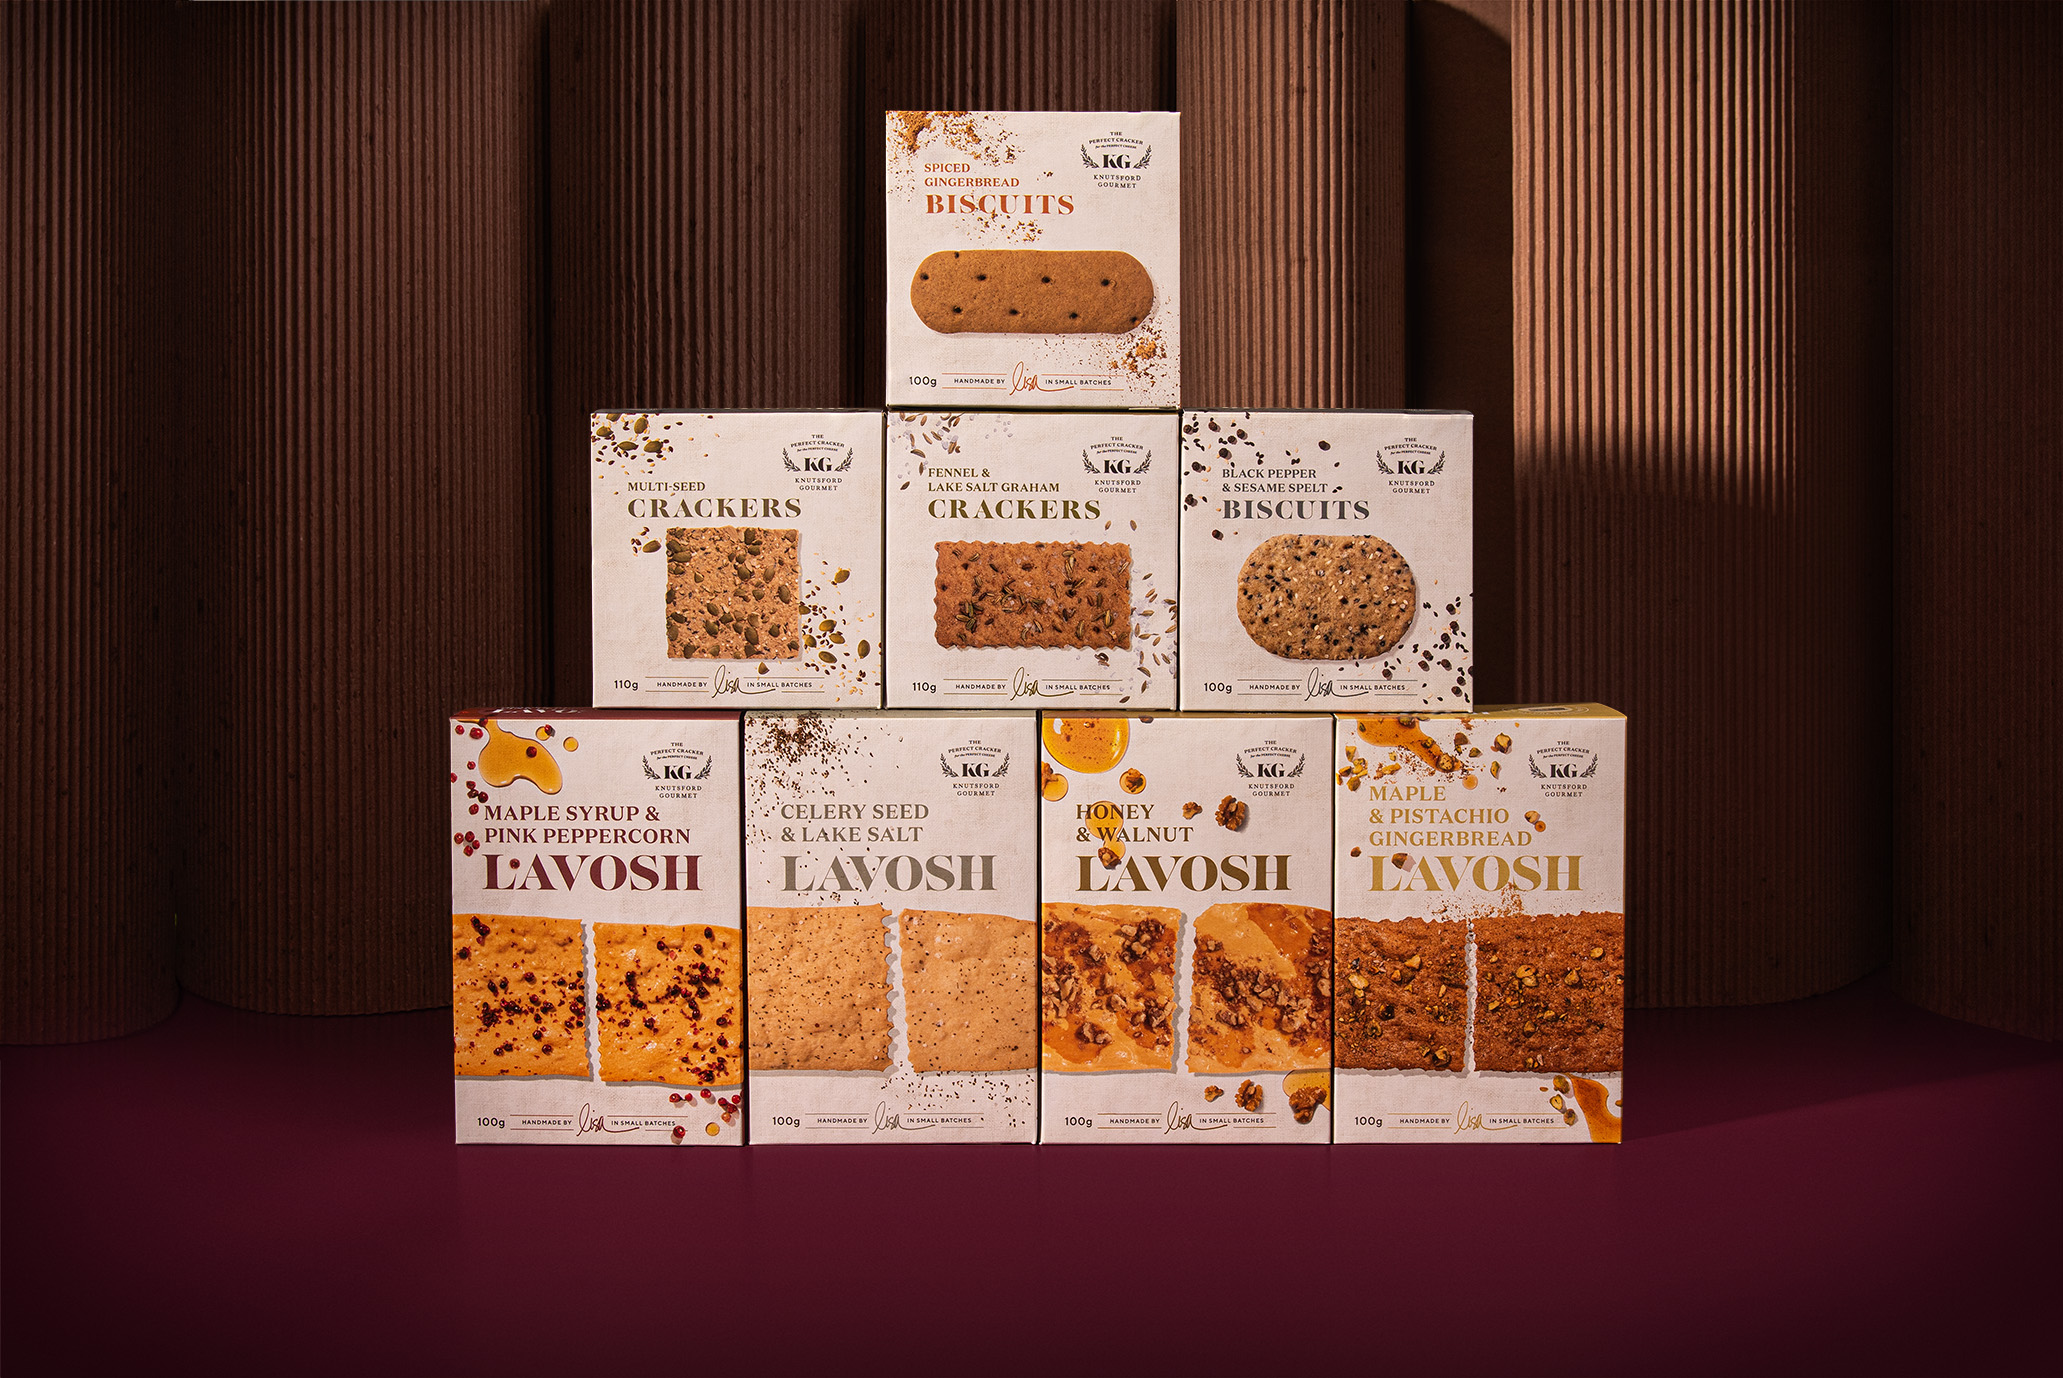 Dessein Create Knutsford Gourmet Cracker Packaging Design